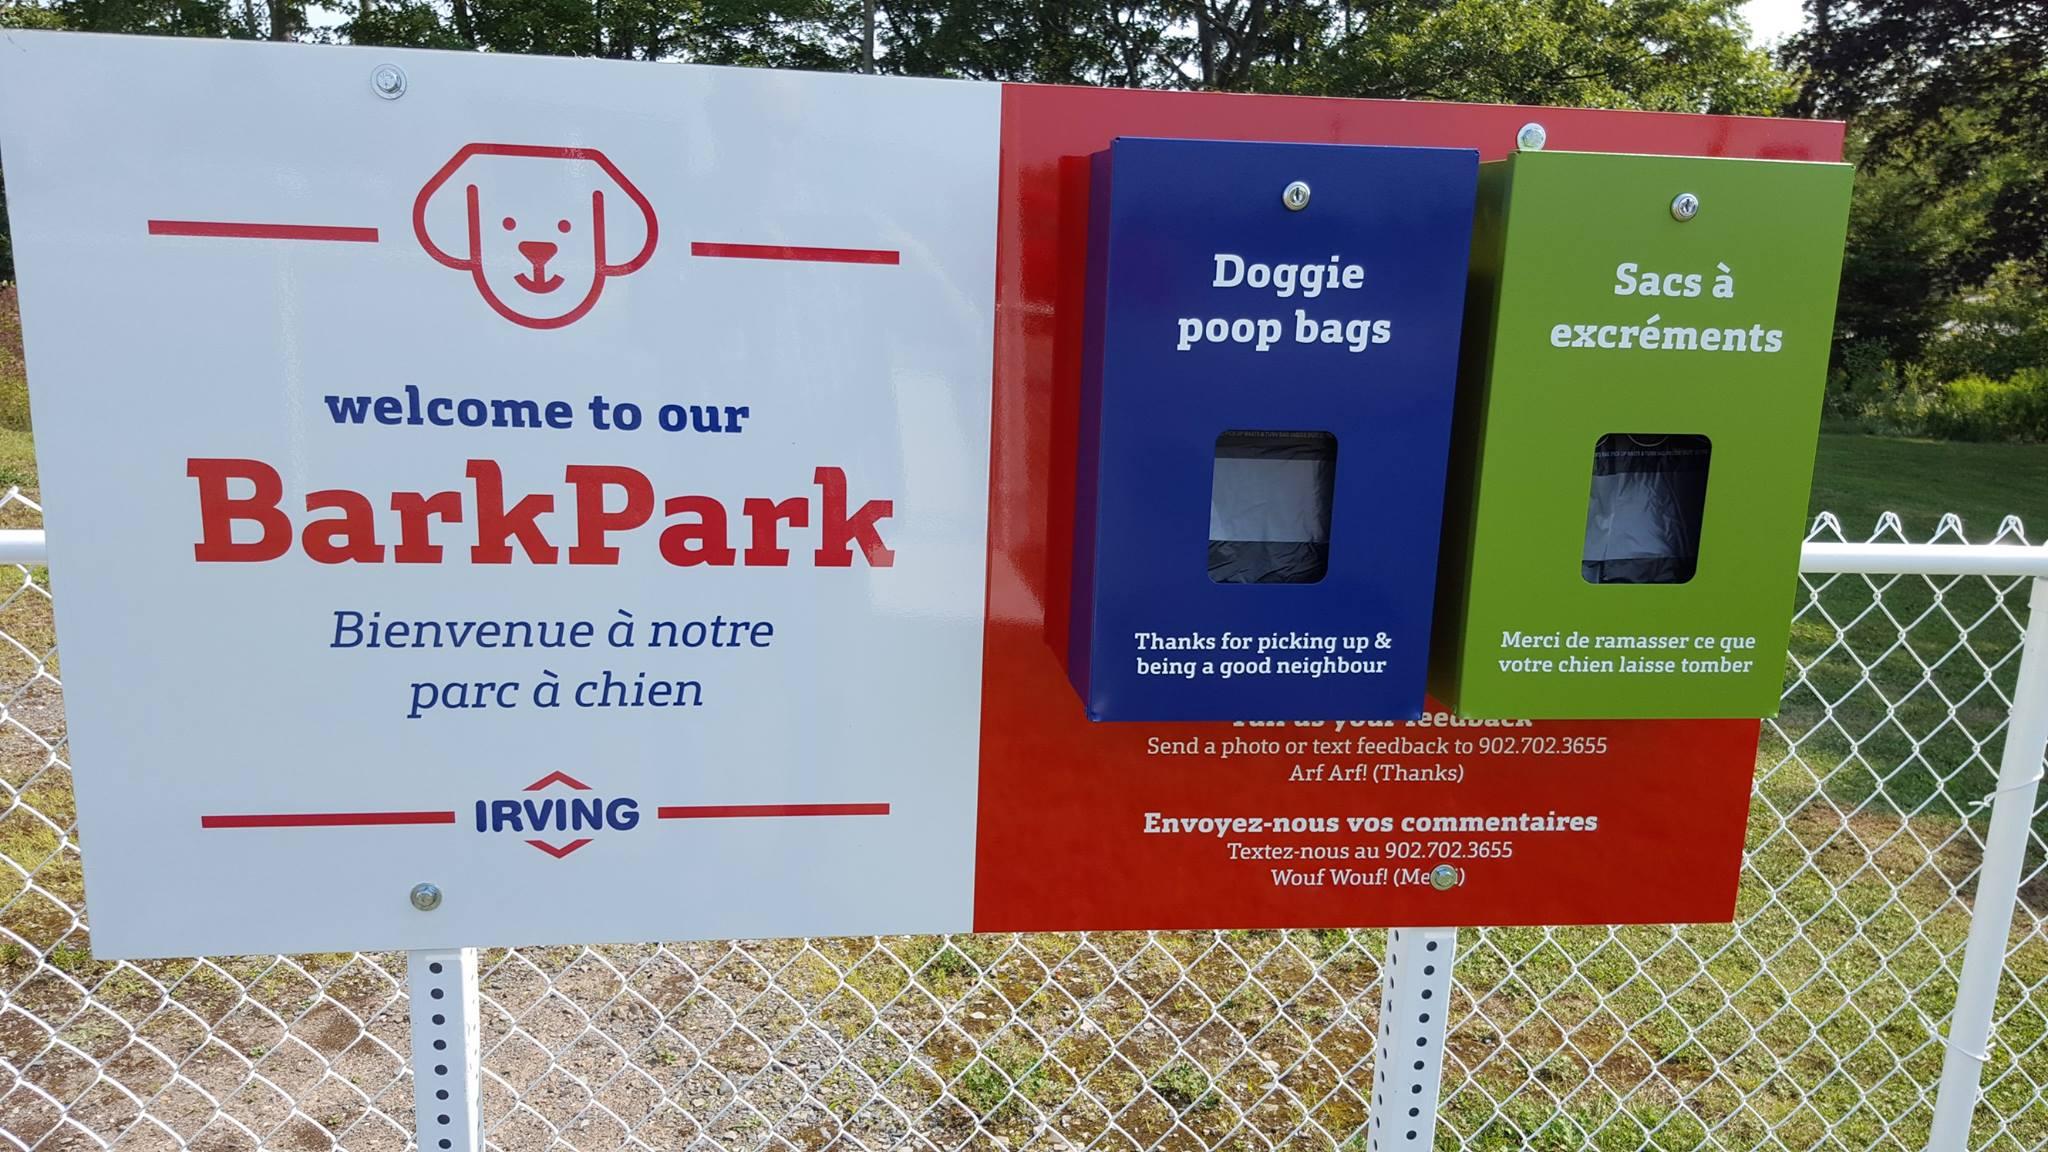 Pet Friendly Irving Big Stop Bark Park